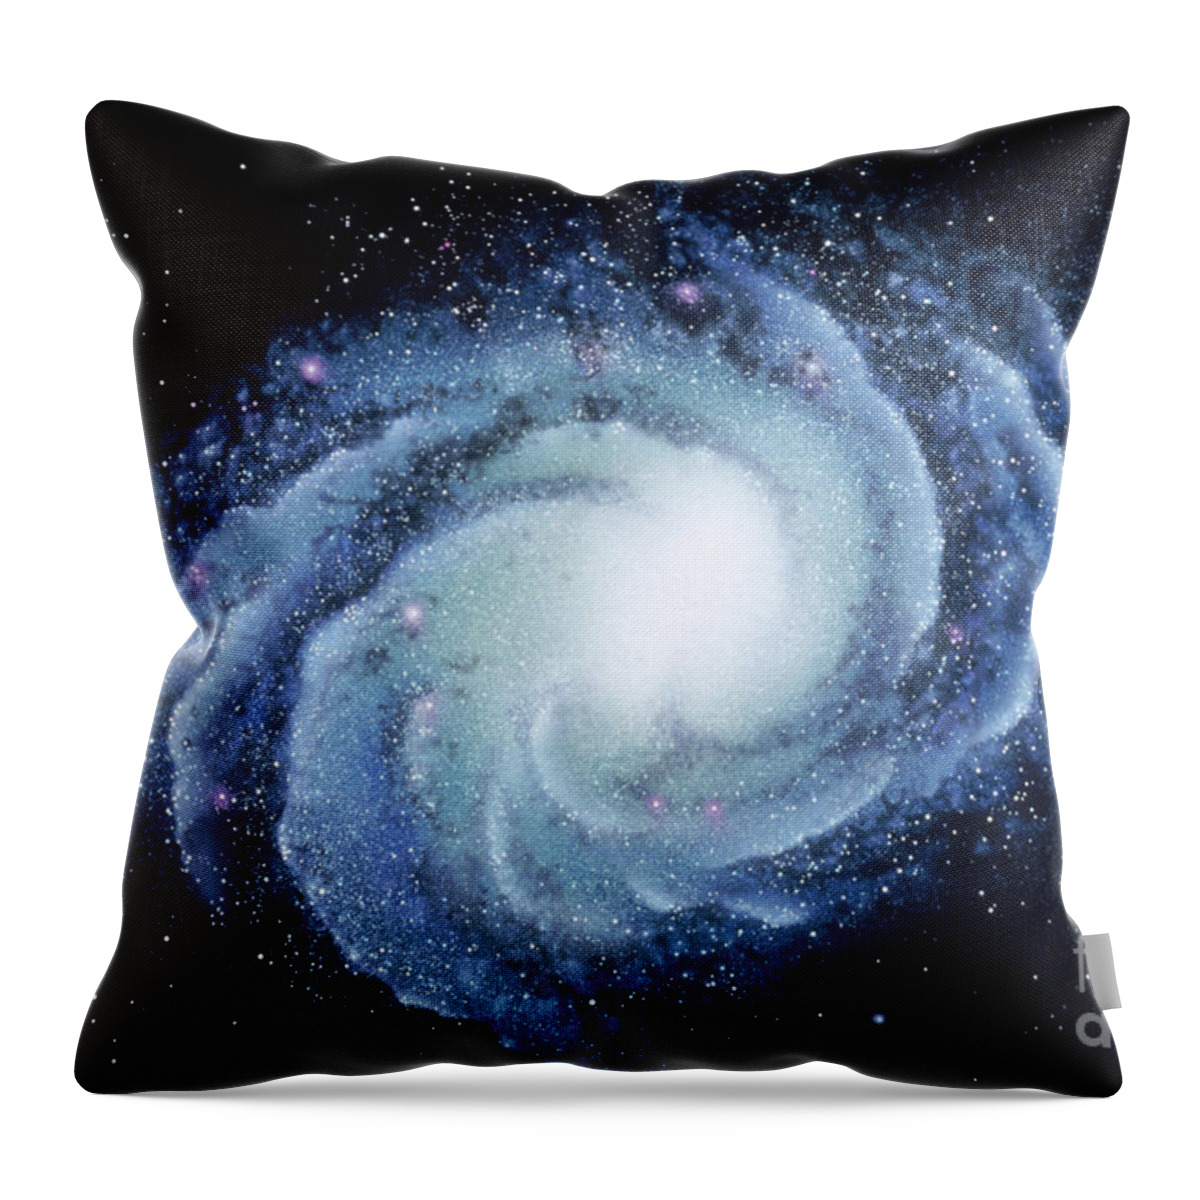 Spiral Galaxy M83 Throw Pillow featuring the photograph Spiral Galaxy M83 by Chris Bjornberg